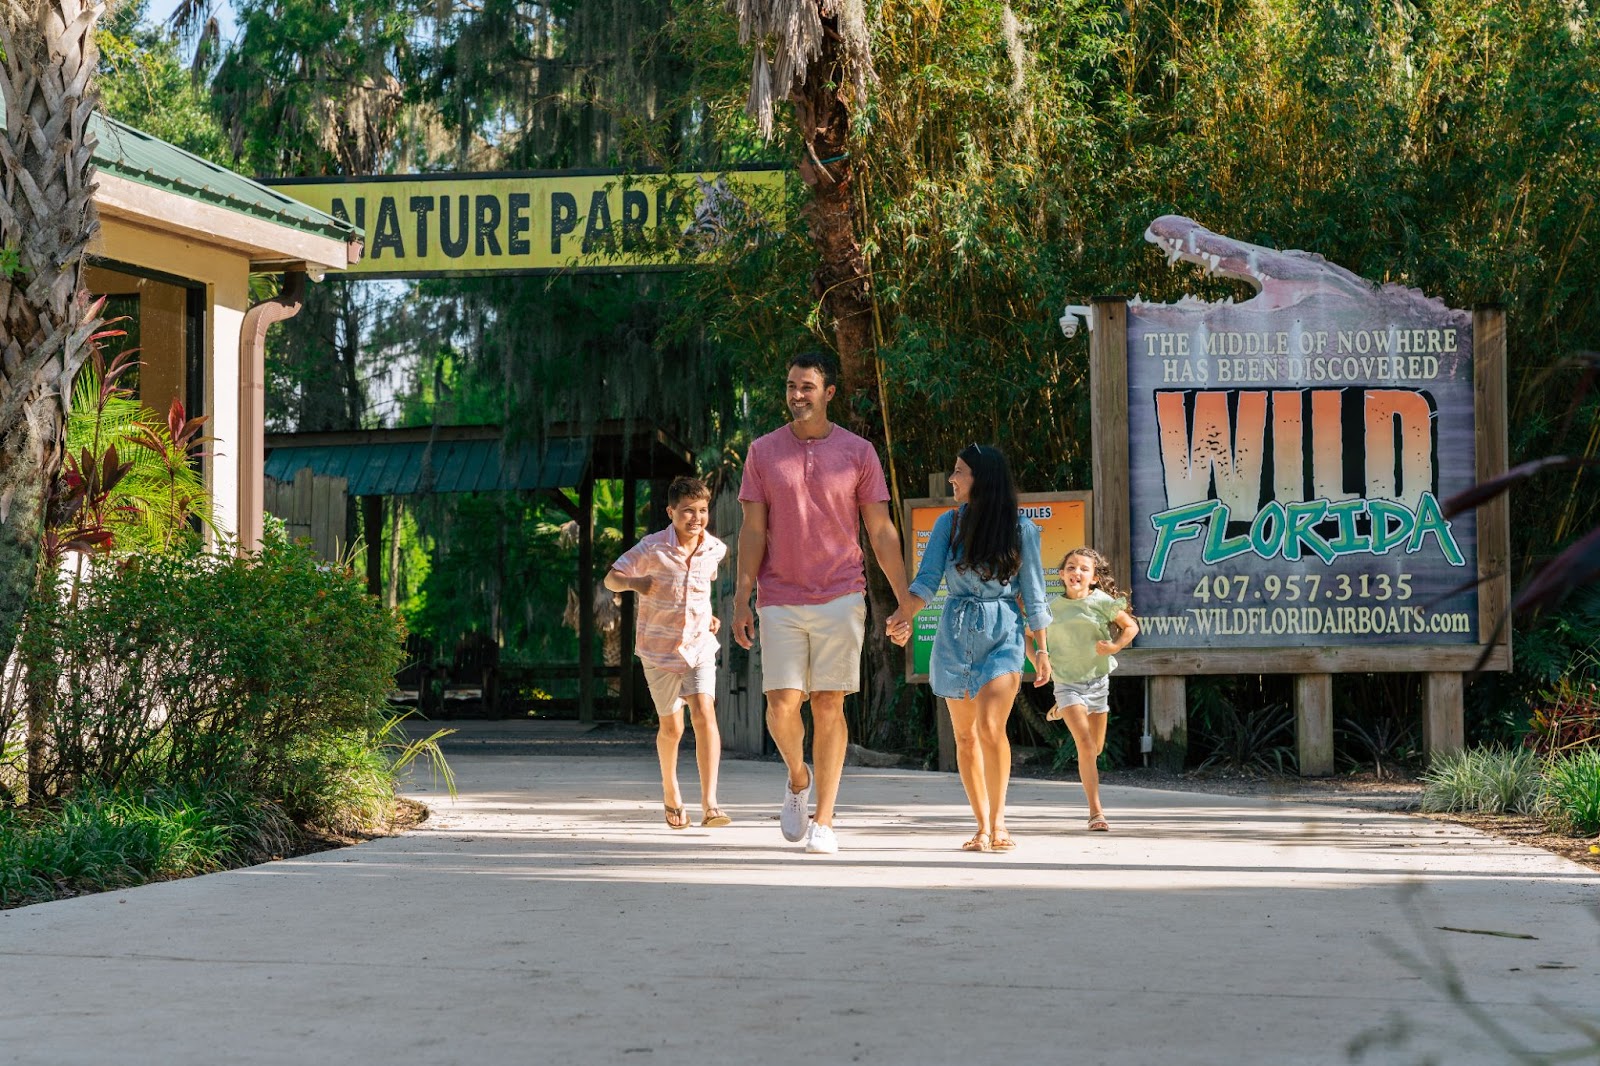 A family enjoys the day at Wild Florida's Gator Park